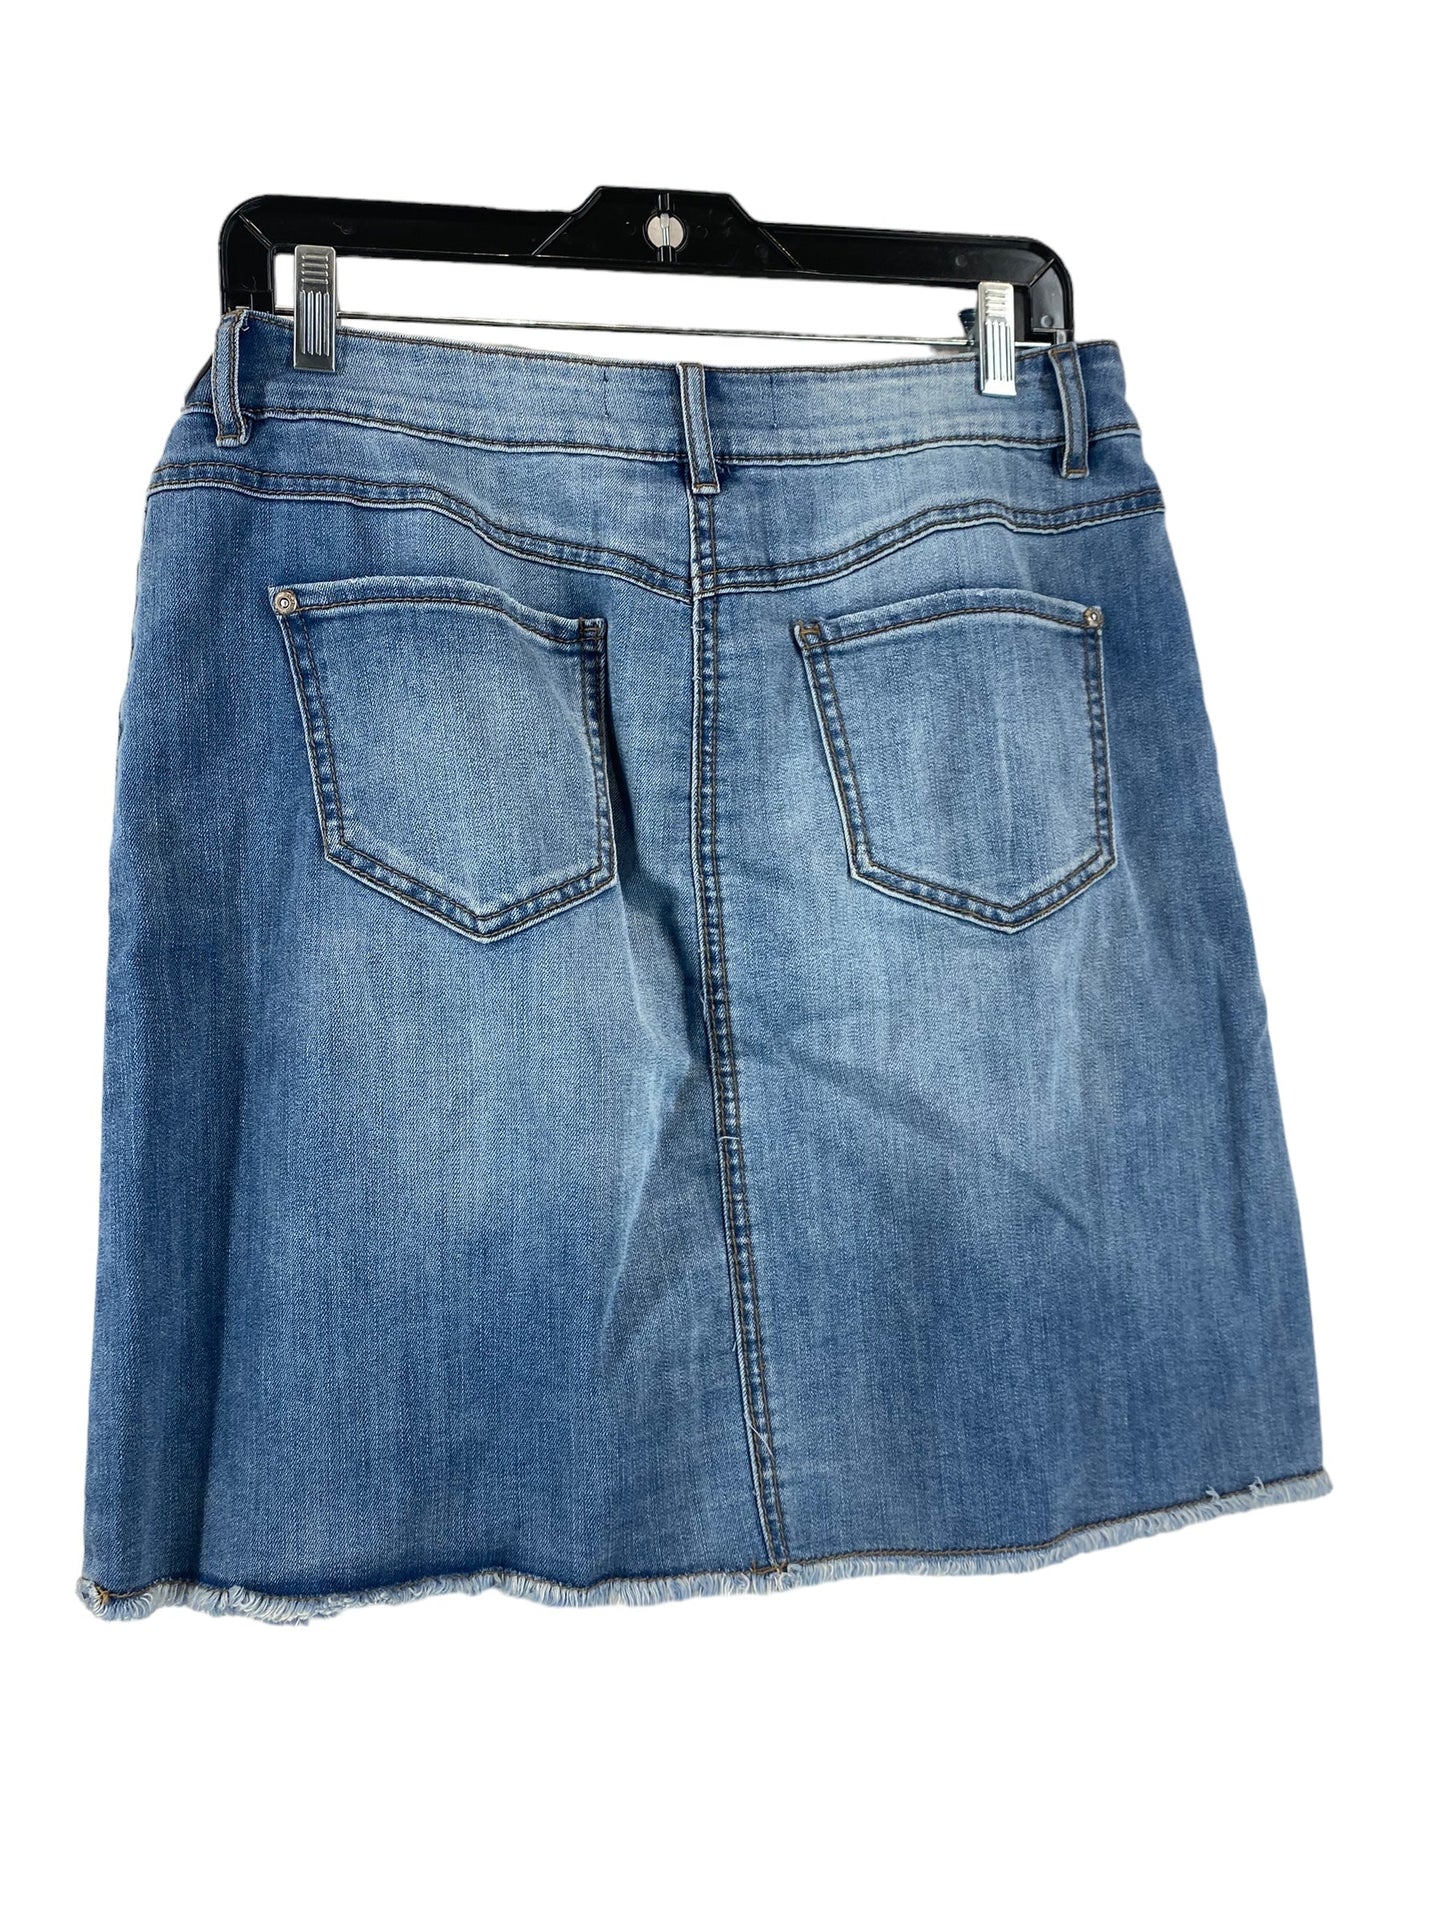 Blue Denim Skirt Mini & Short Clothes Mentor, Size 8